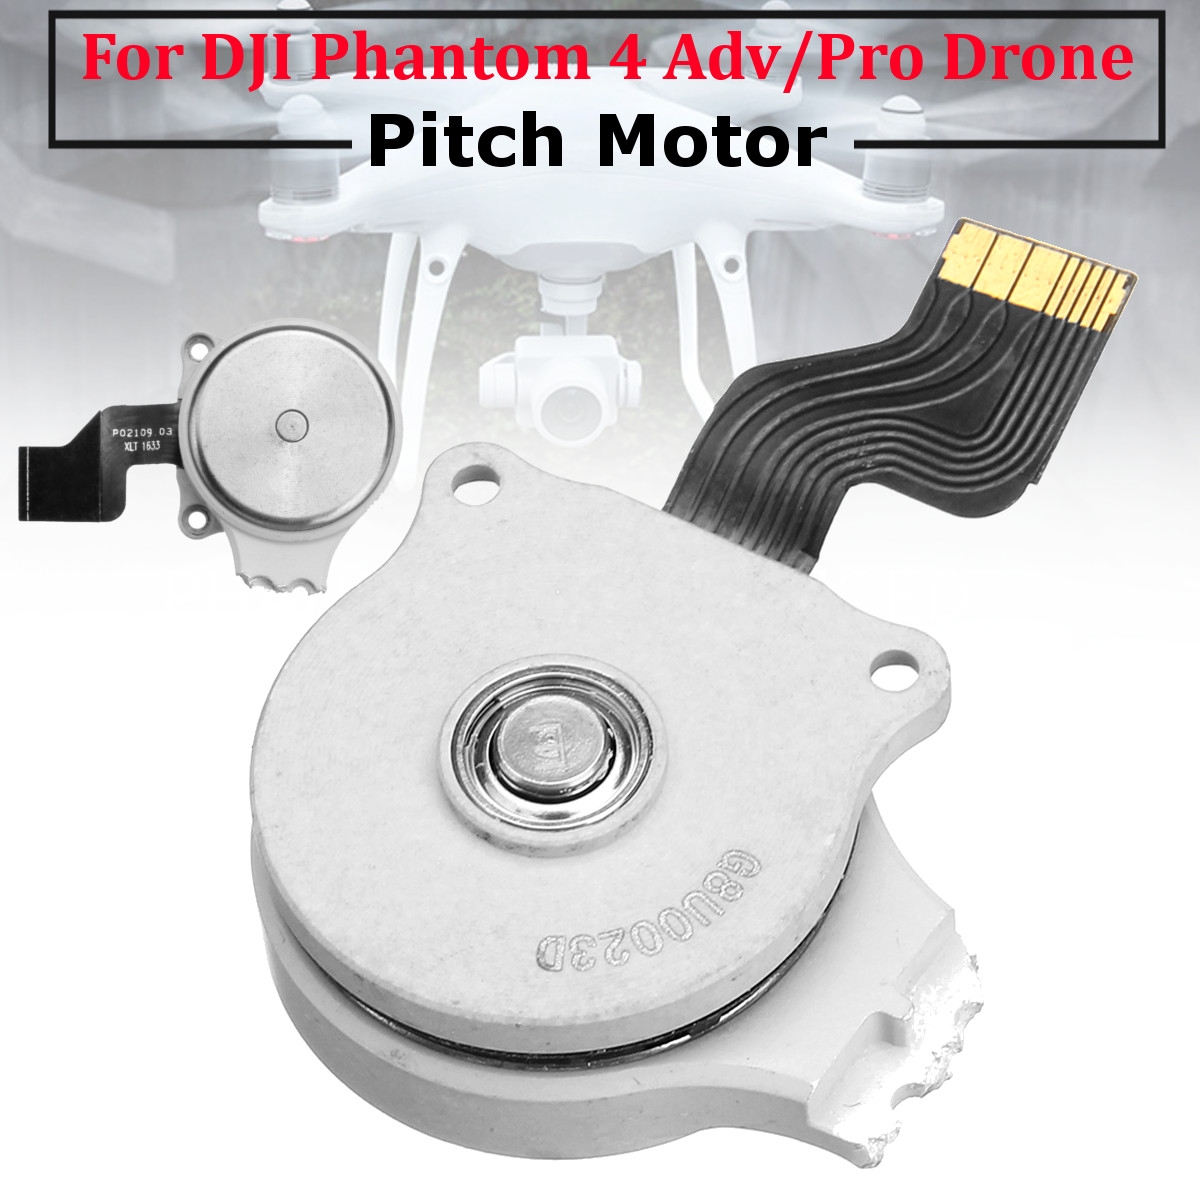 Gimbal Pitch Motor RC Quadcopter Parts For DJI Phantom 4 Adv/Pro